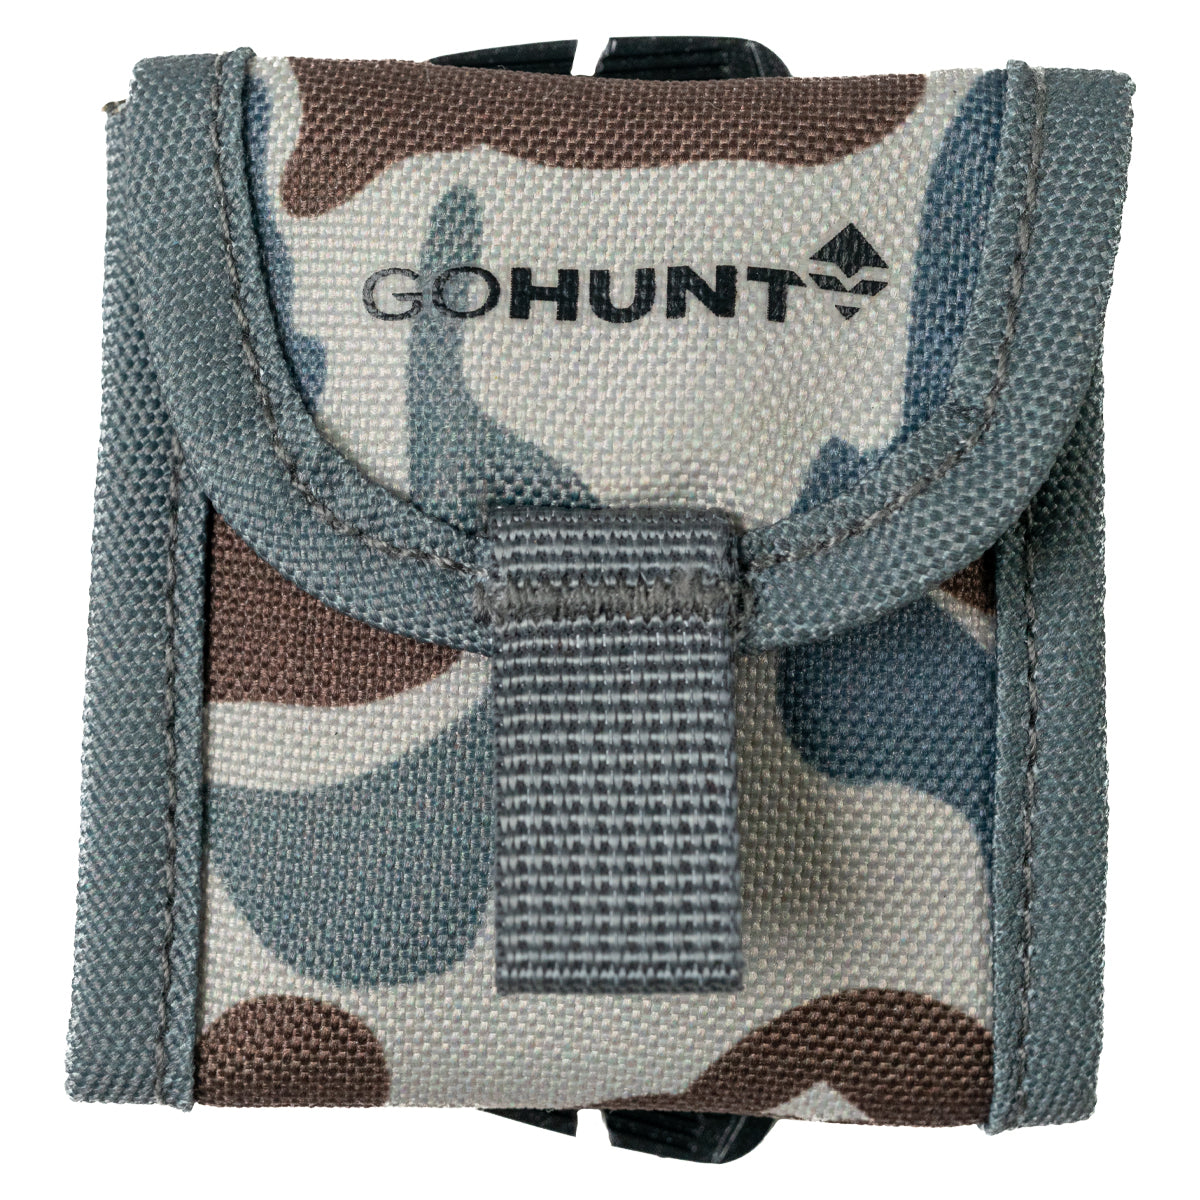 GOHUNT Diaphragm Call Holder in  by GOHUNT | GOHUNT - GOHUNT Shop